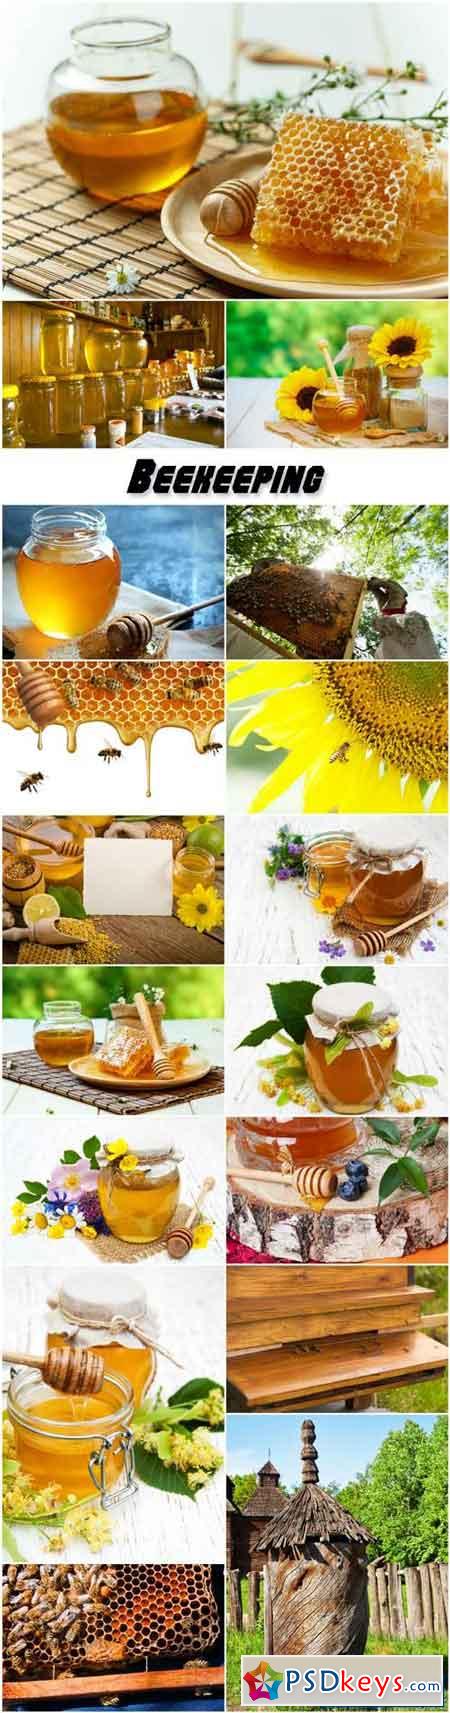 Beekeeping, fresh honey